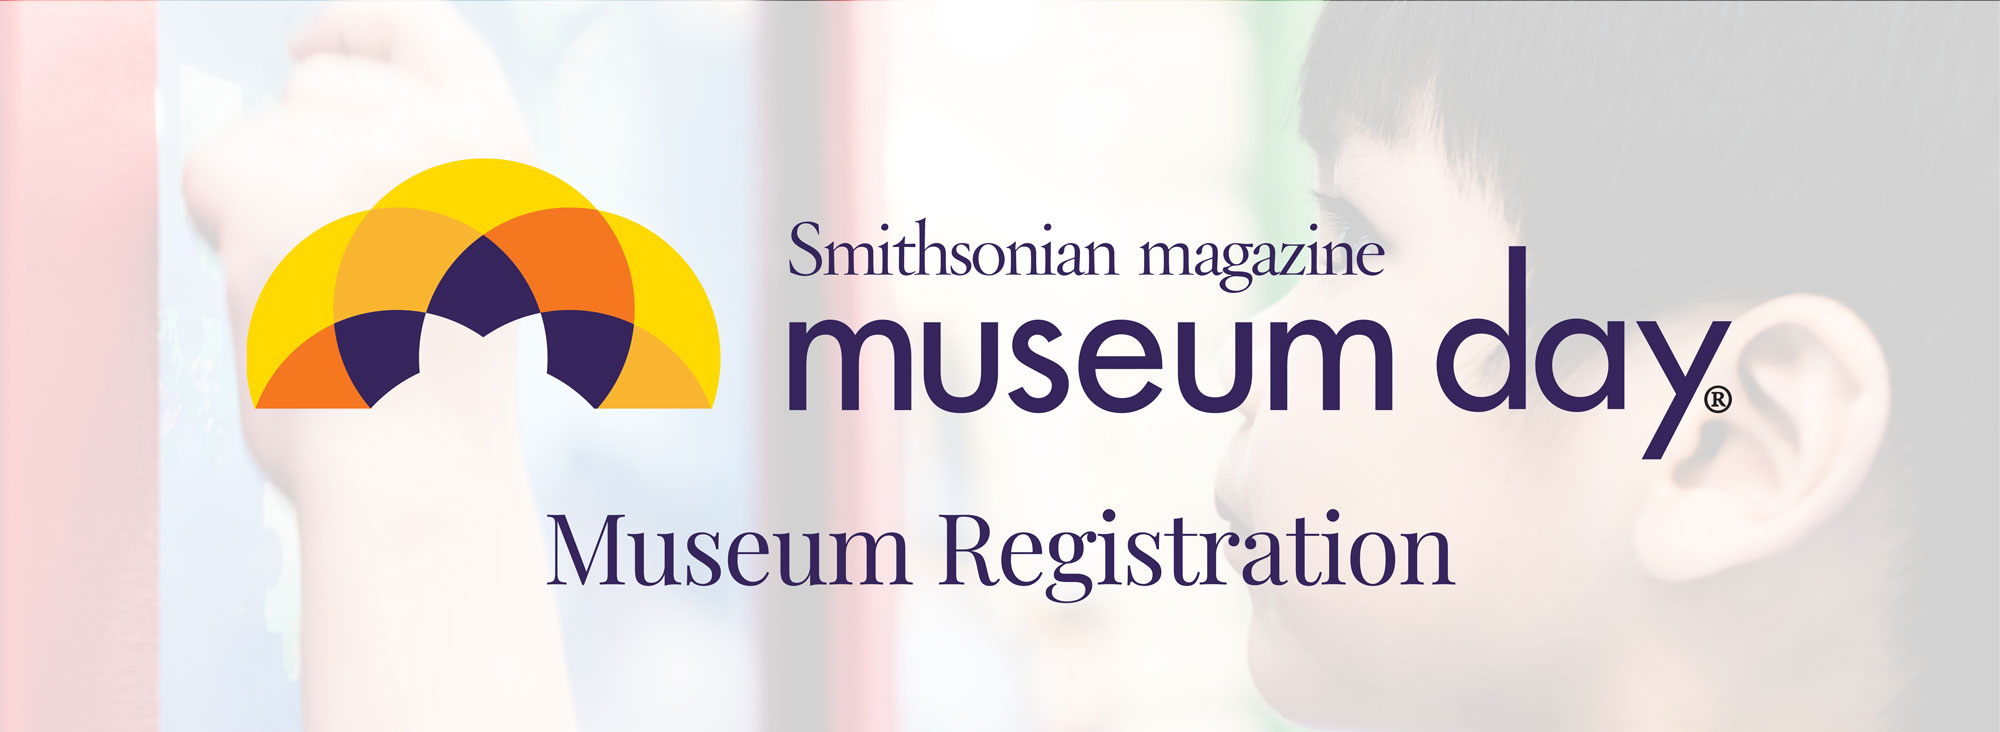 Museum Day registration banner